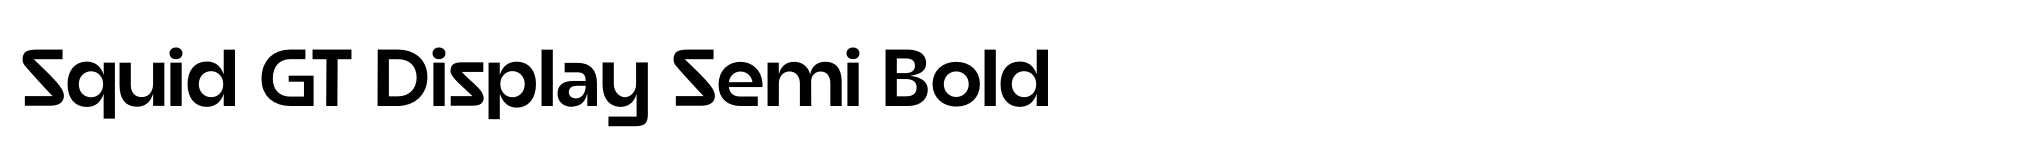 Squid GT Display Semi Bold image